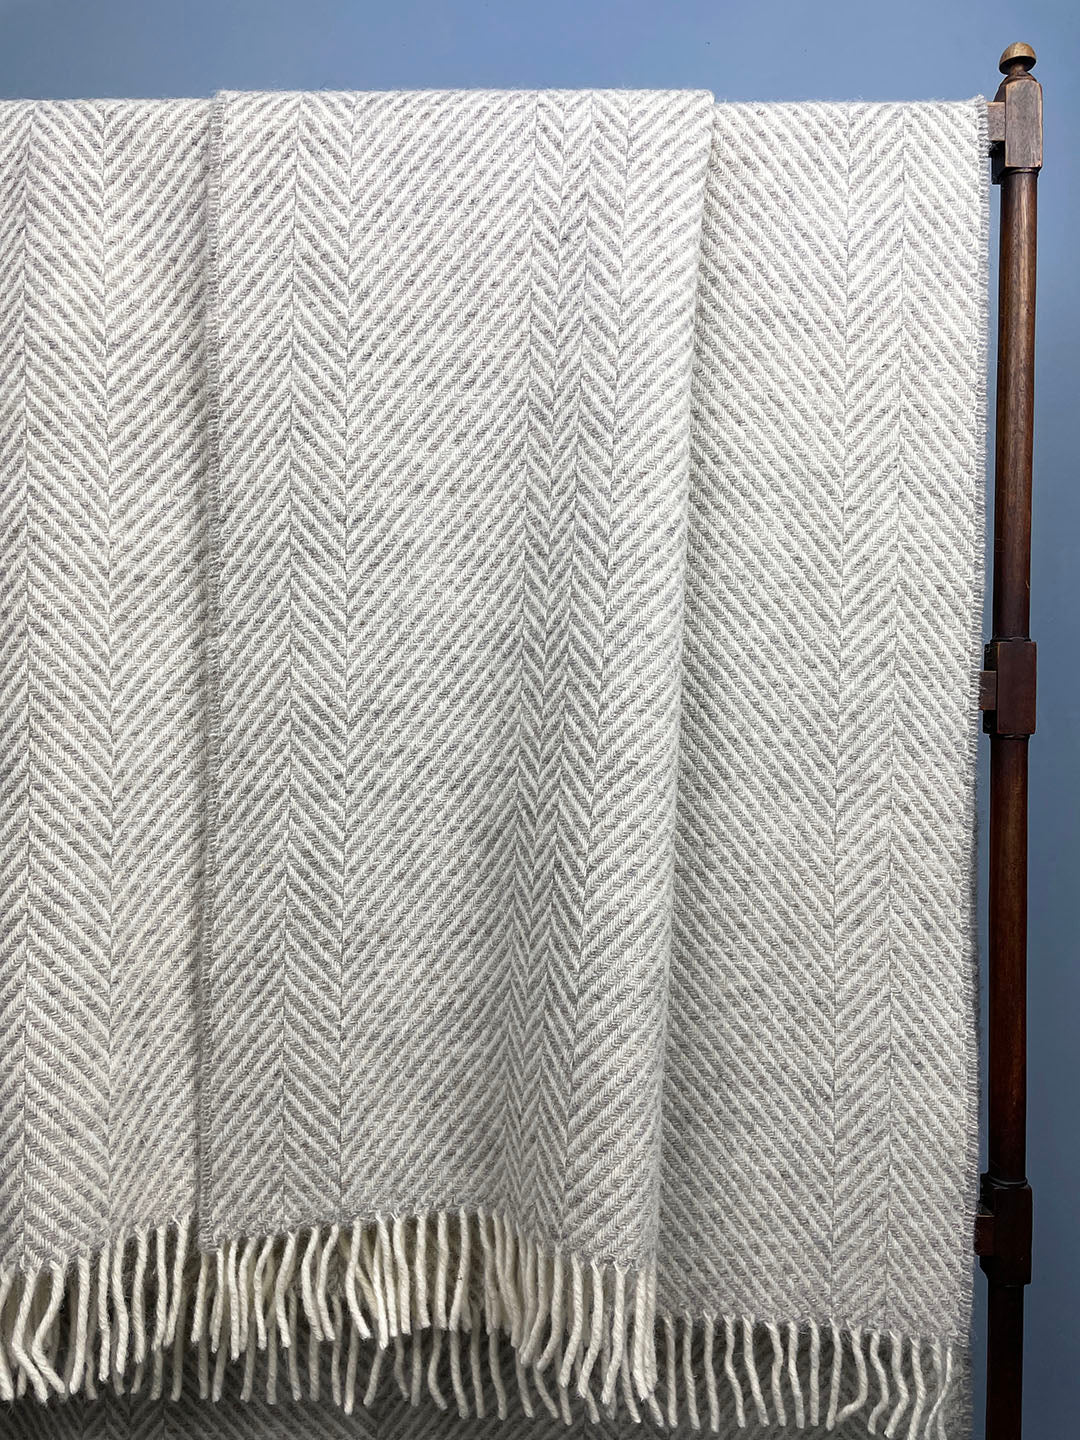 Silver grey blanket with tassels and geometric zig zag pattern